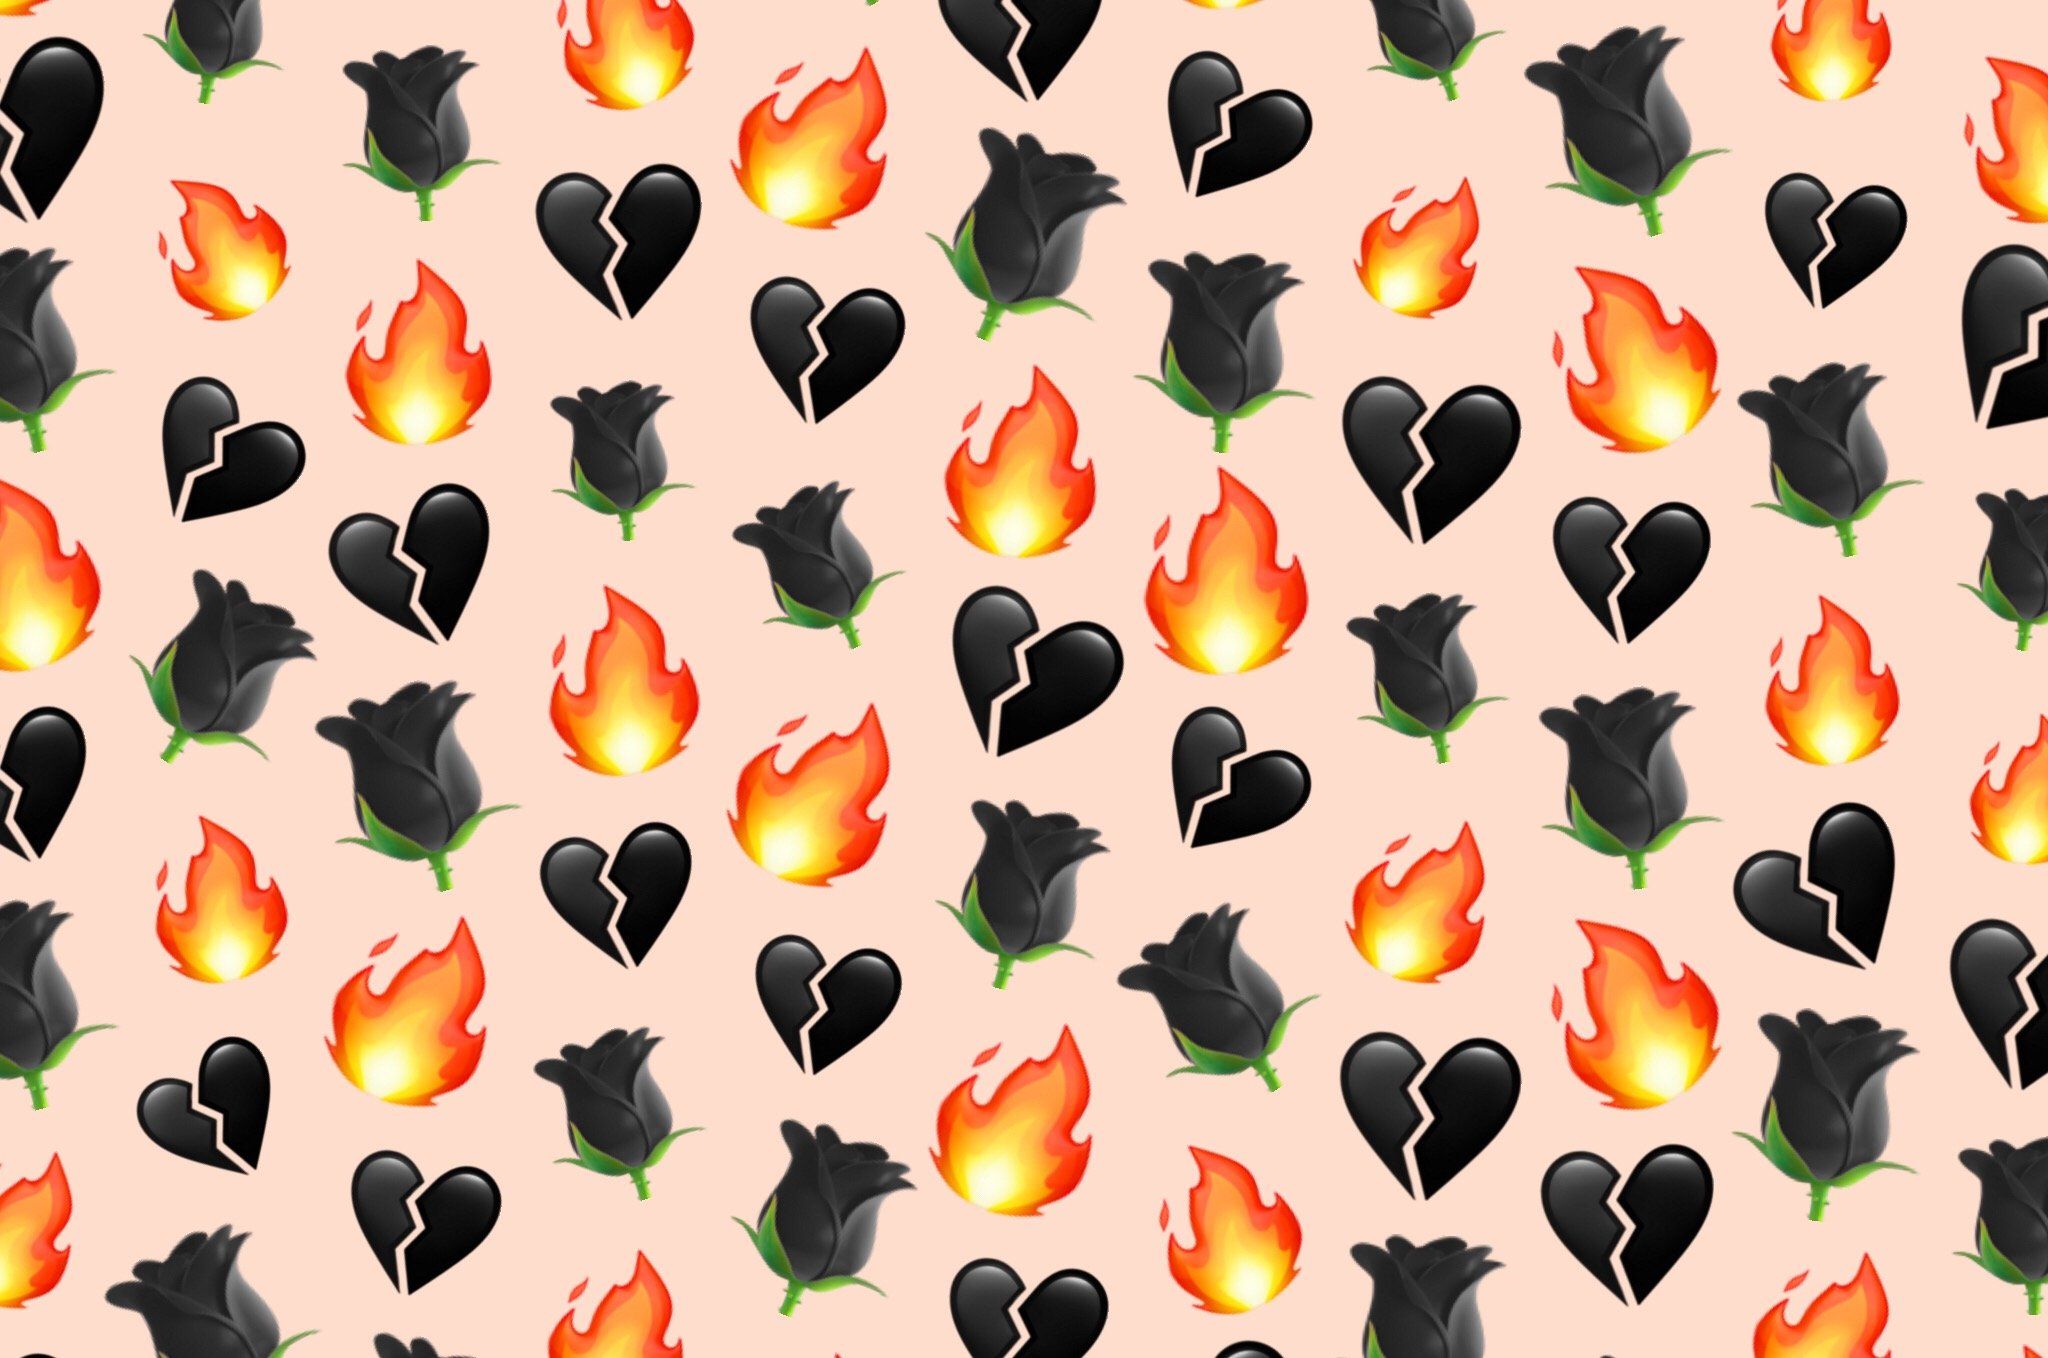 Free download Bunch Of Heart Emoji 1280x756 Wallpaper teahubio 1280x756  for your Desktop Mobile  Tablet  Explore 27 Heart Emoji Wallpapers  Heart  Backgrounds Alien Emoji Wallpaper Emoji Wallpapers